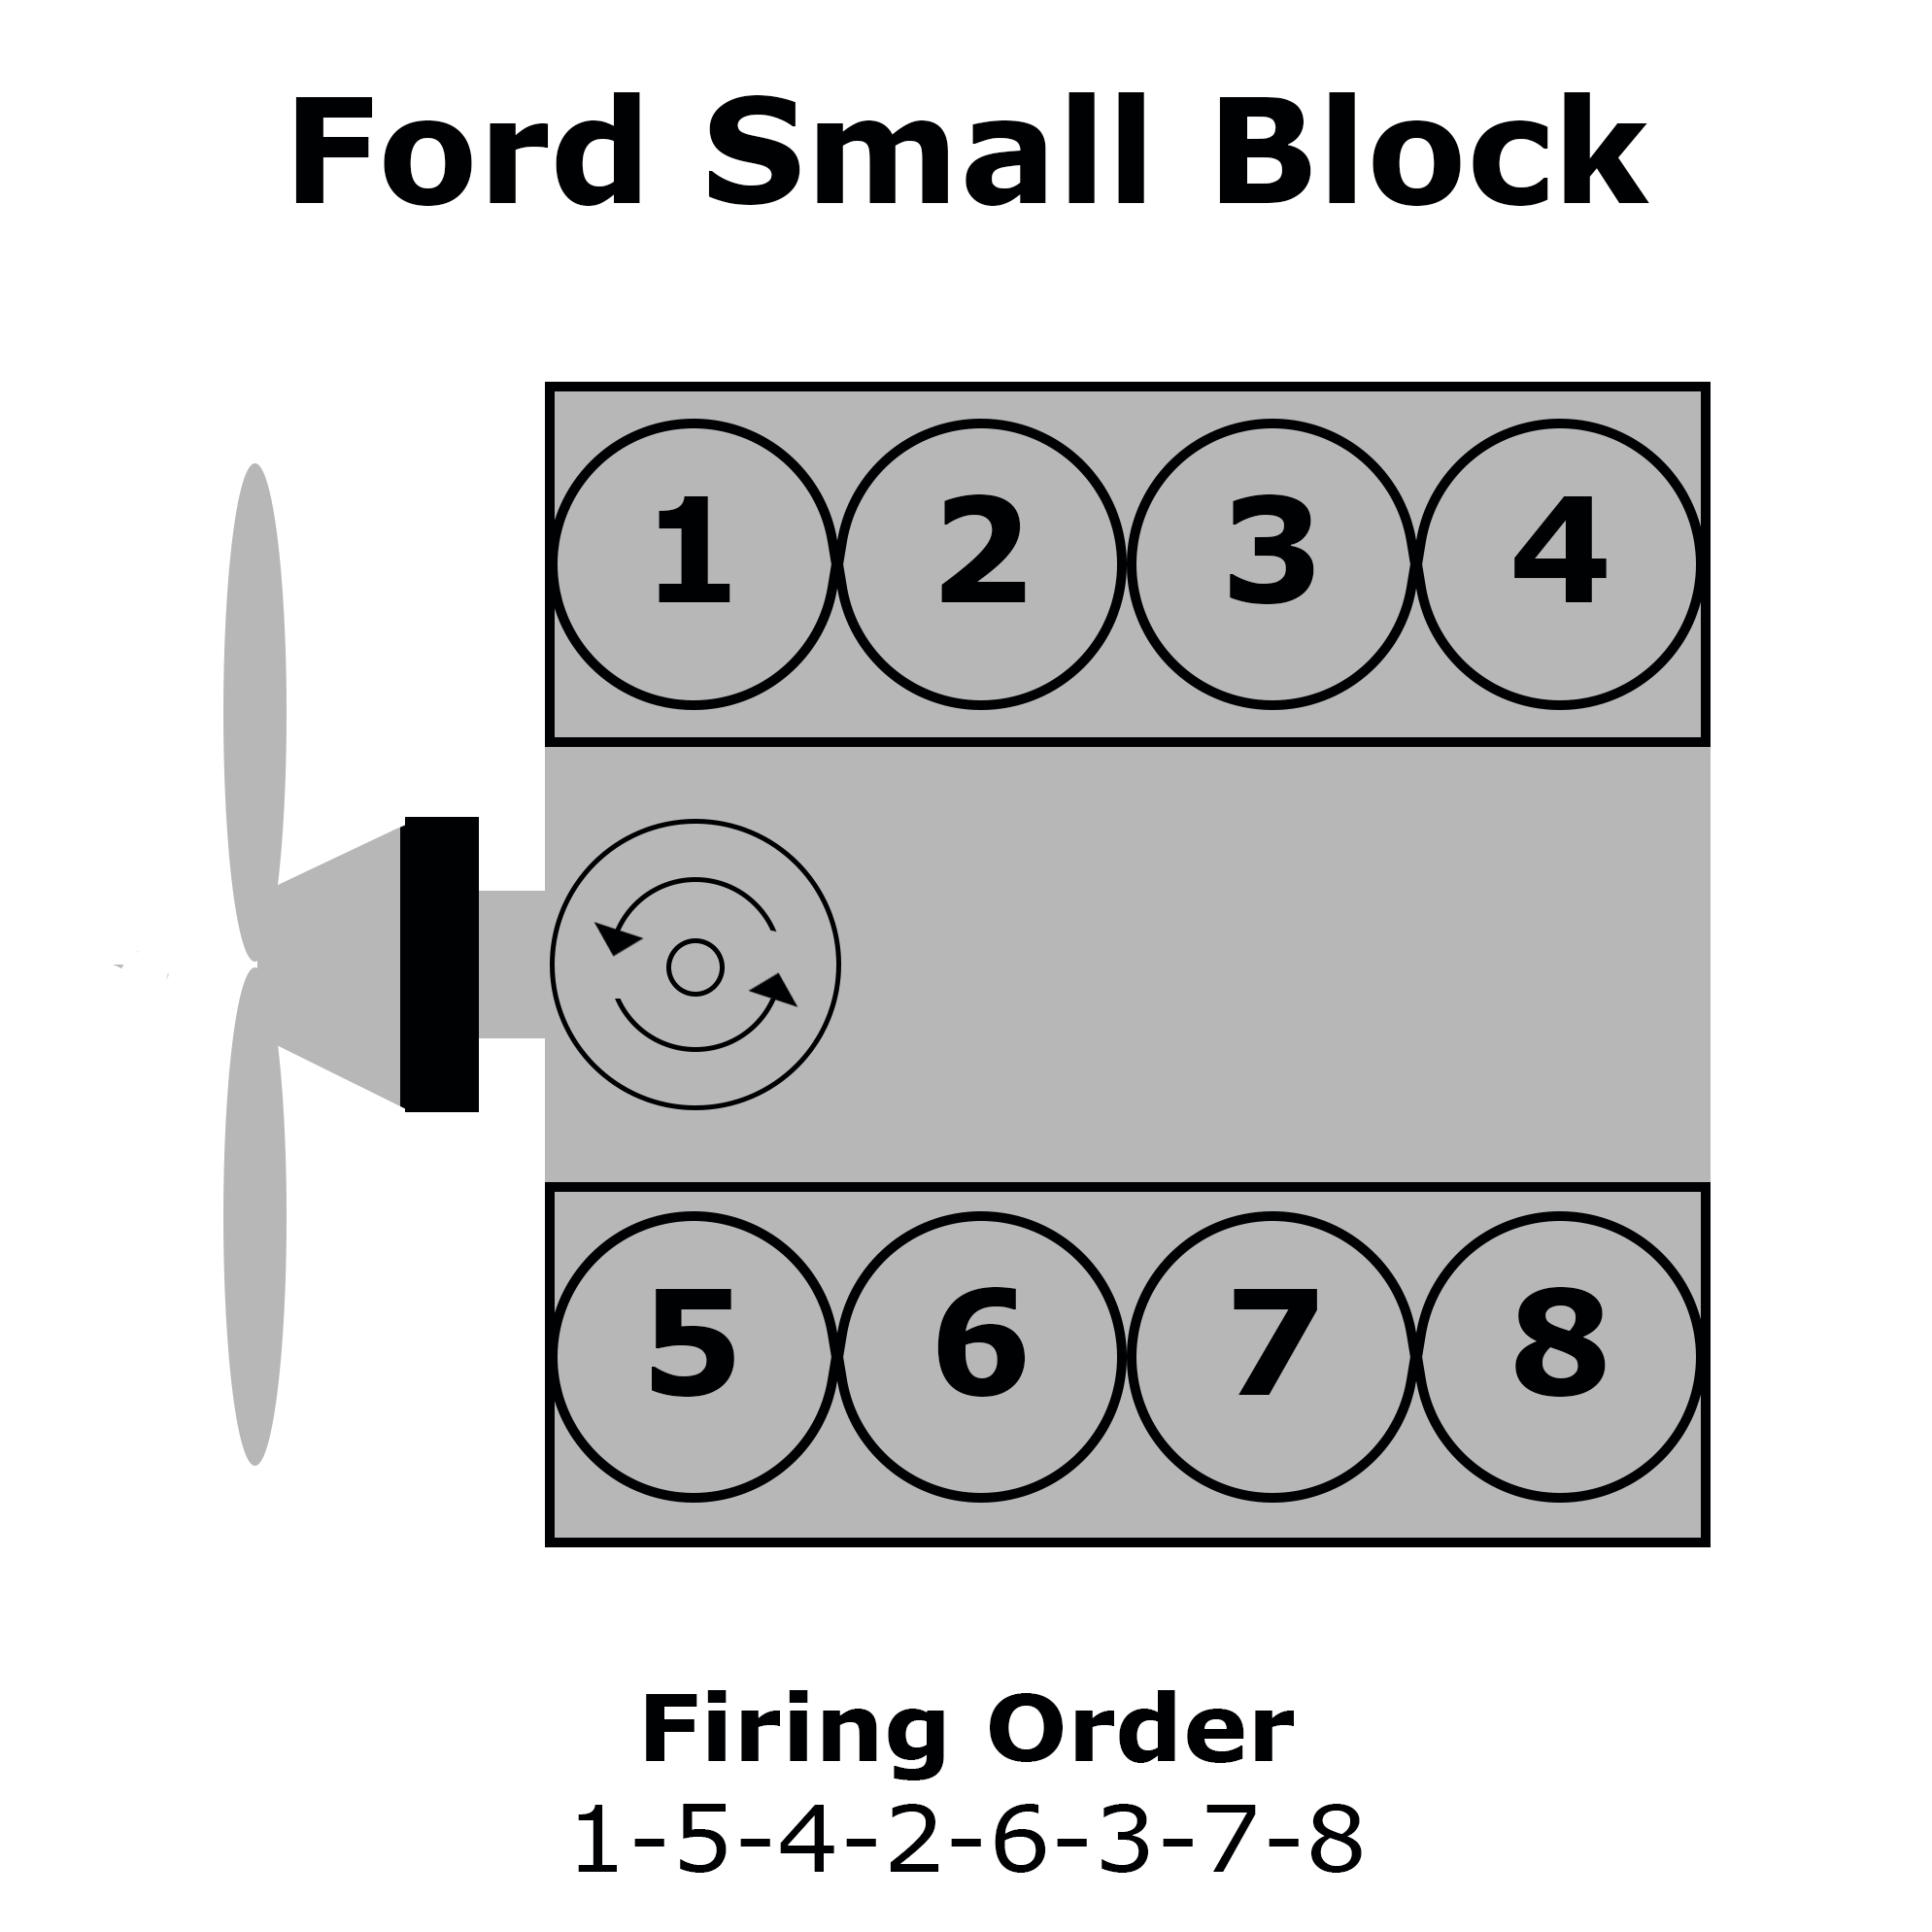 Ford Small Block Firing Order